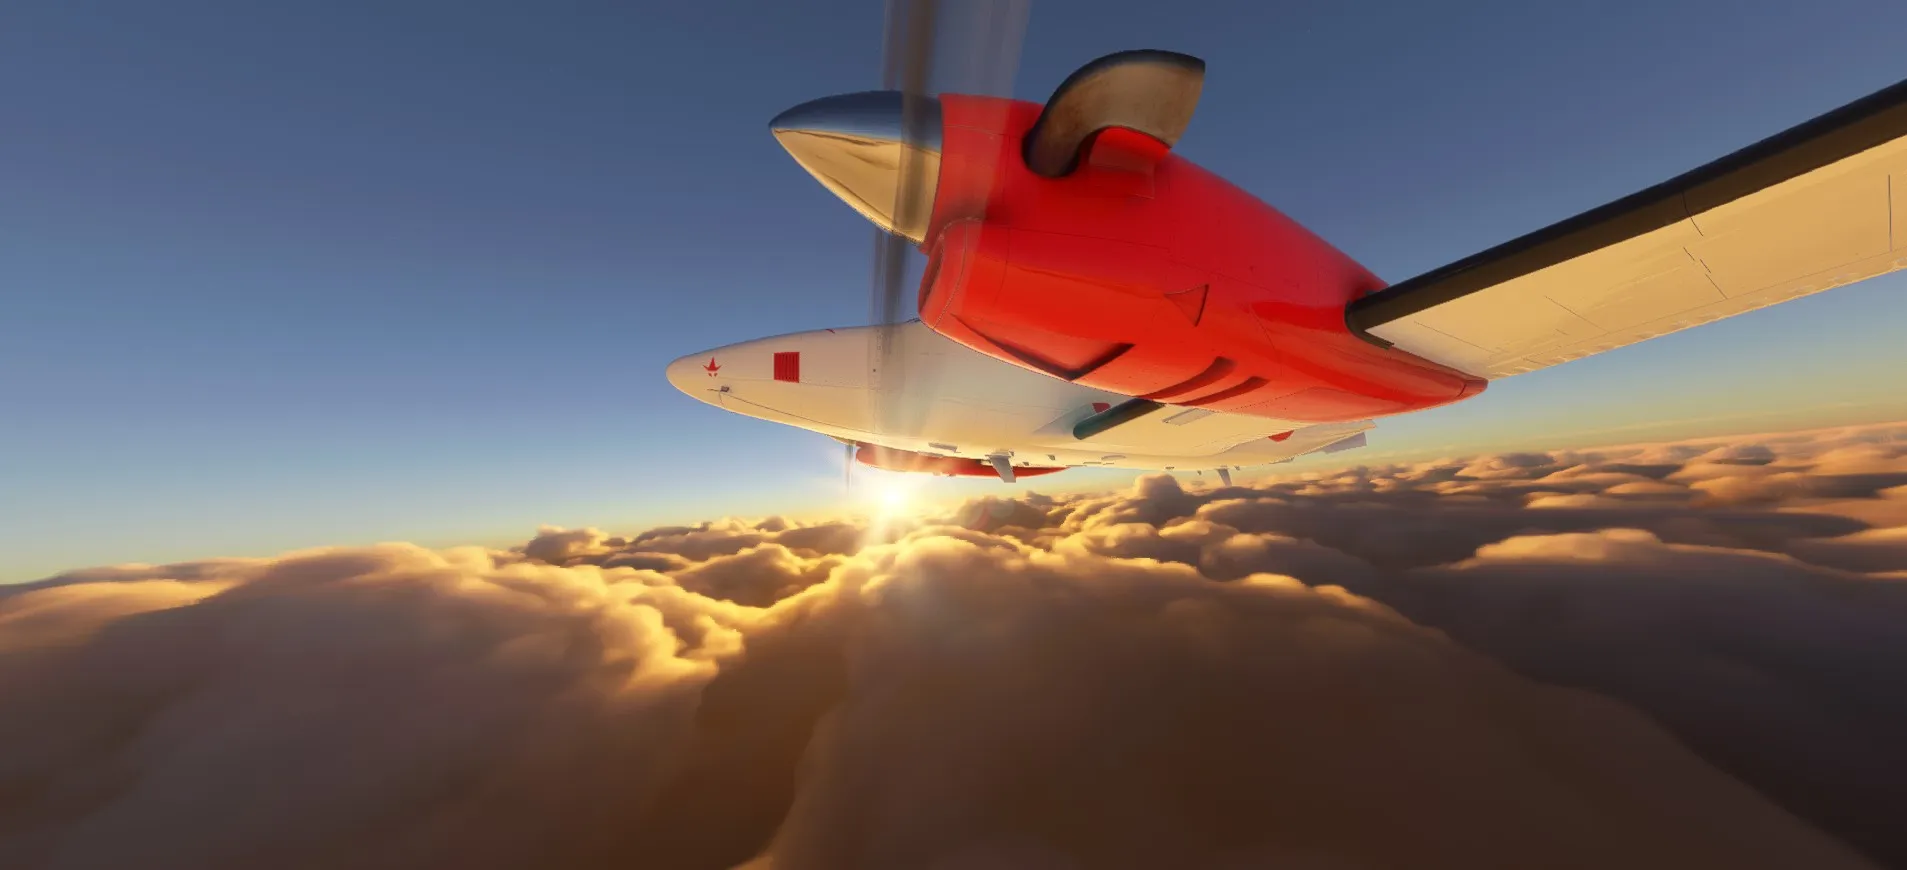 Microsoft Flight Simulator Game of the Year Edition update